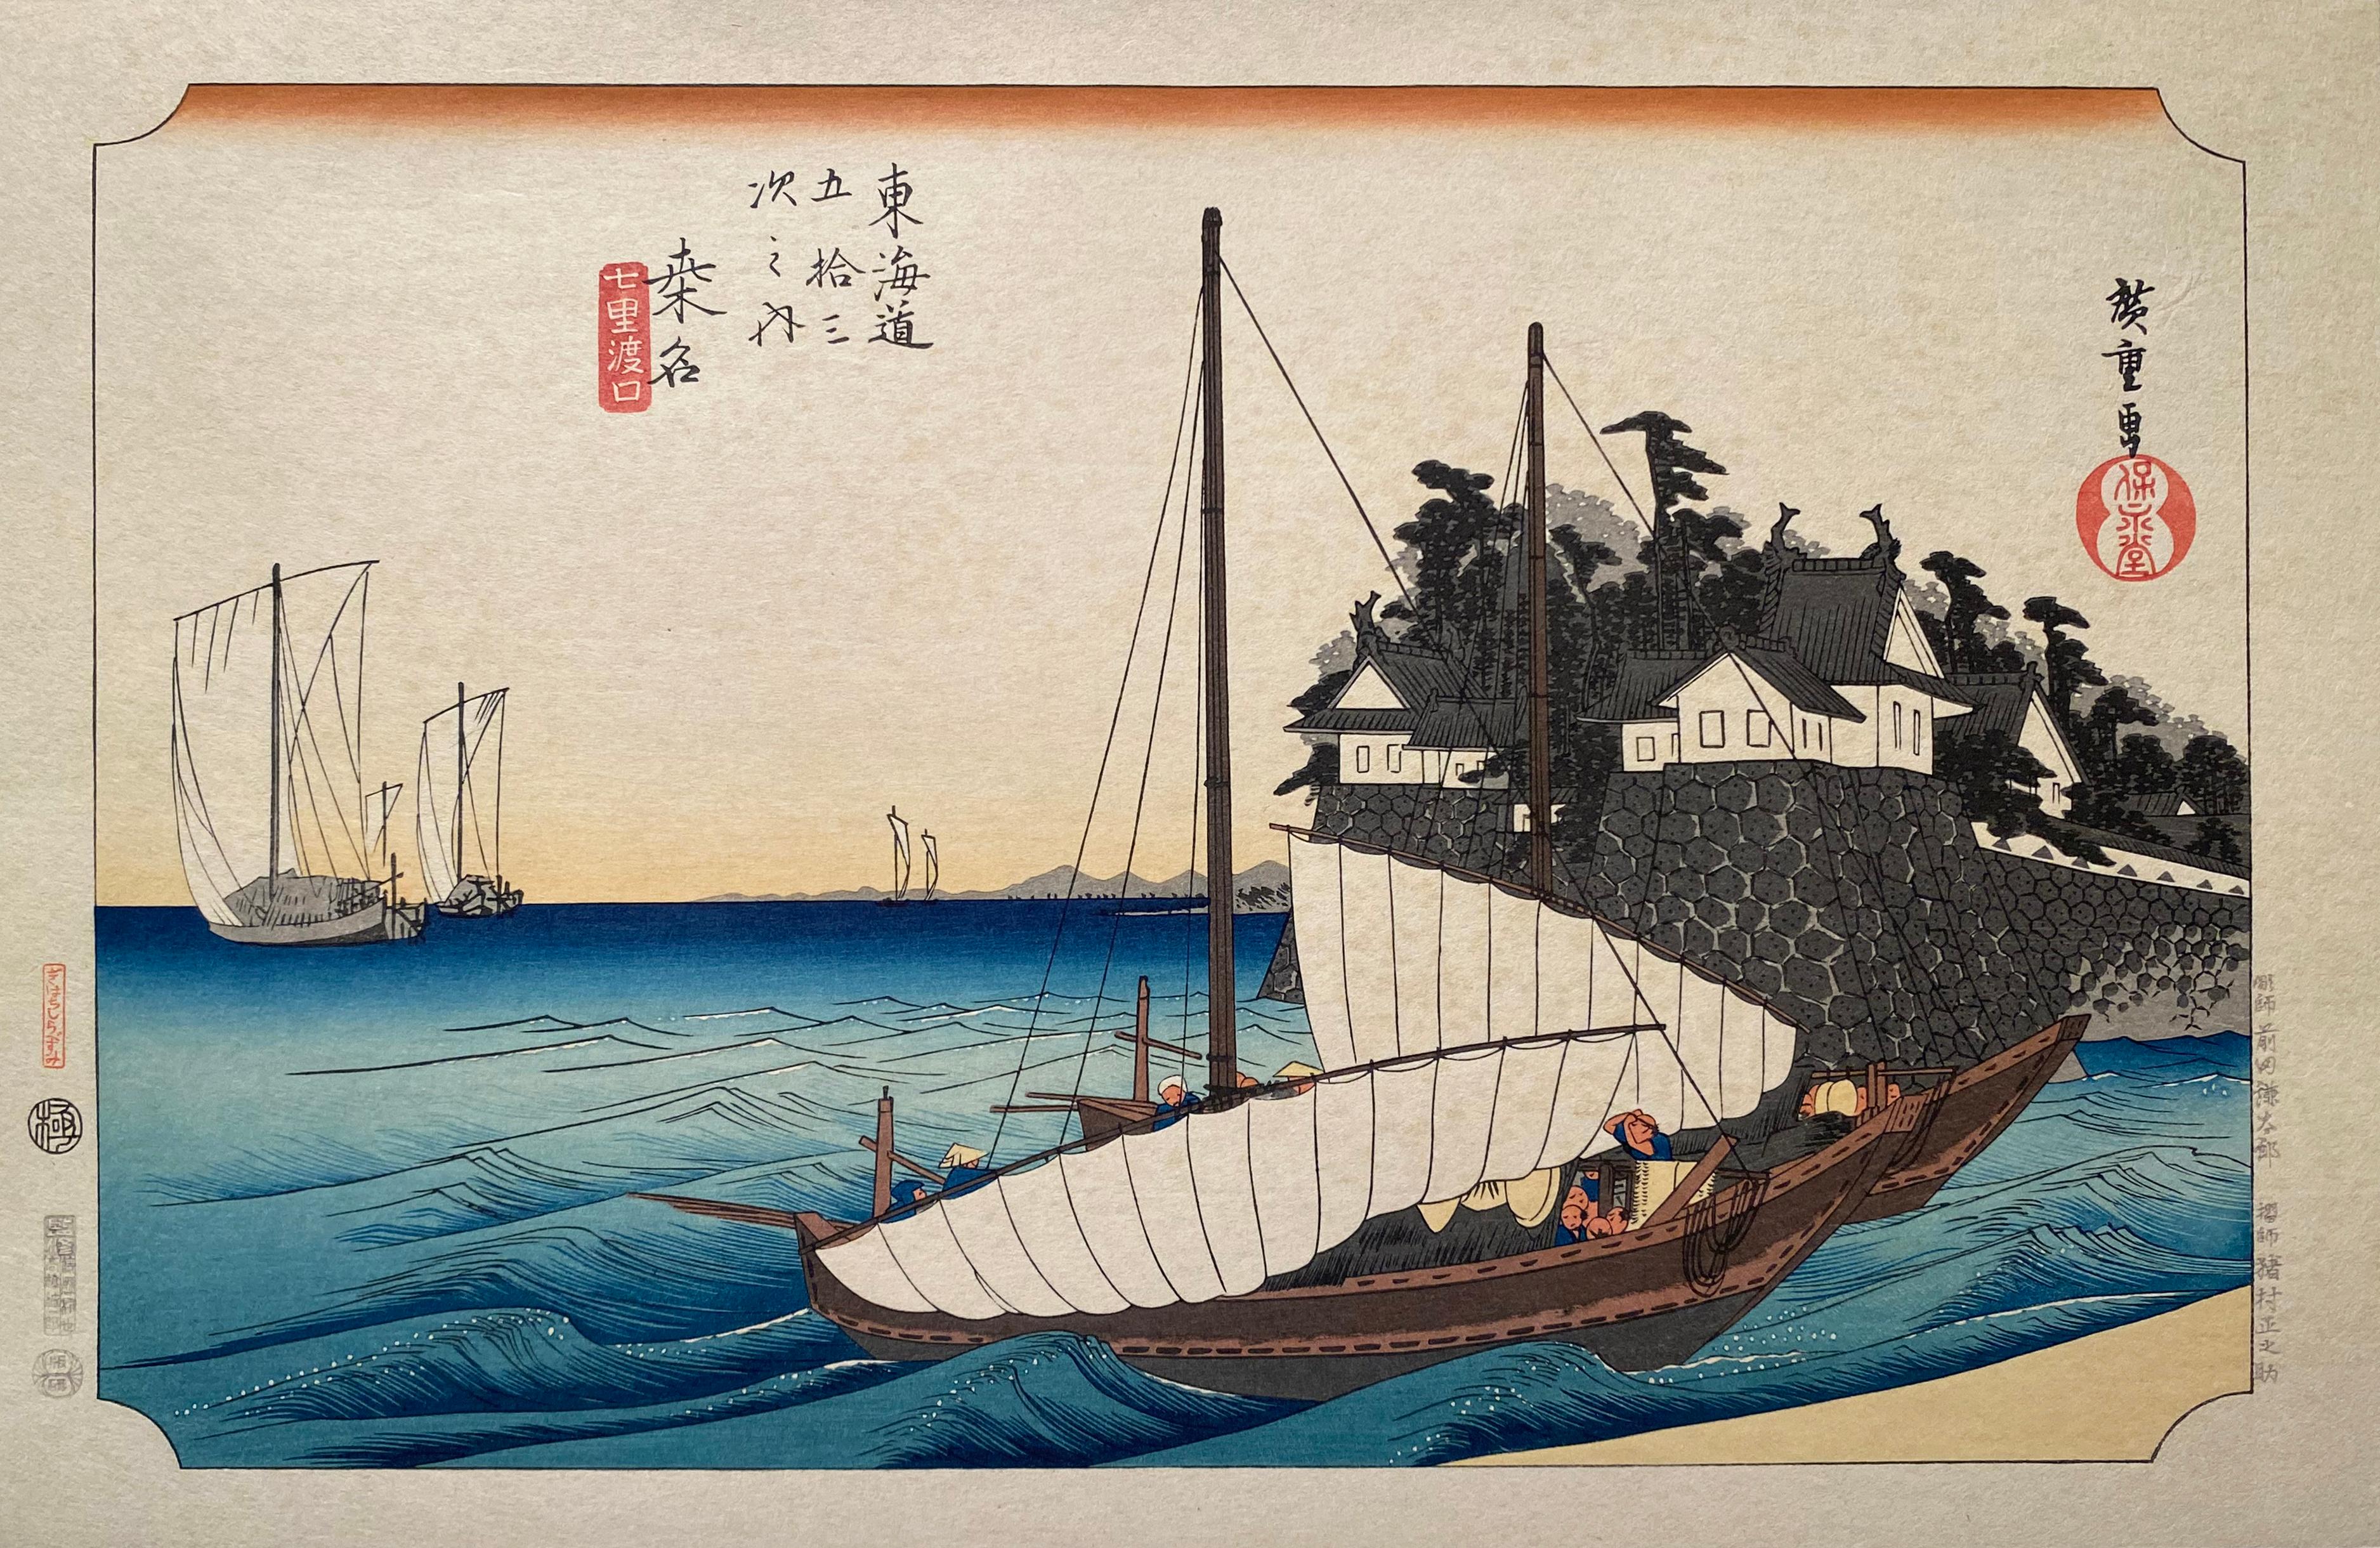 Utagawa Hiroshige (Ando Hiroshige) Landscape Print - 'Shichiri Ferry', After Utagawa Hiroshige 歌川廣重, Ukiyo-e Woodblock, Tokaido